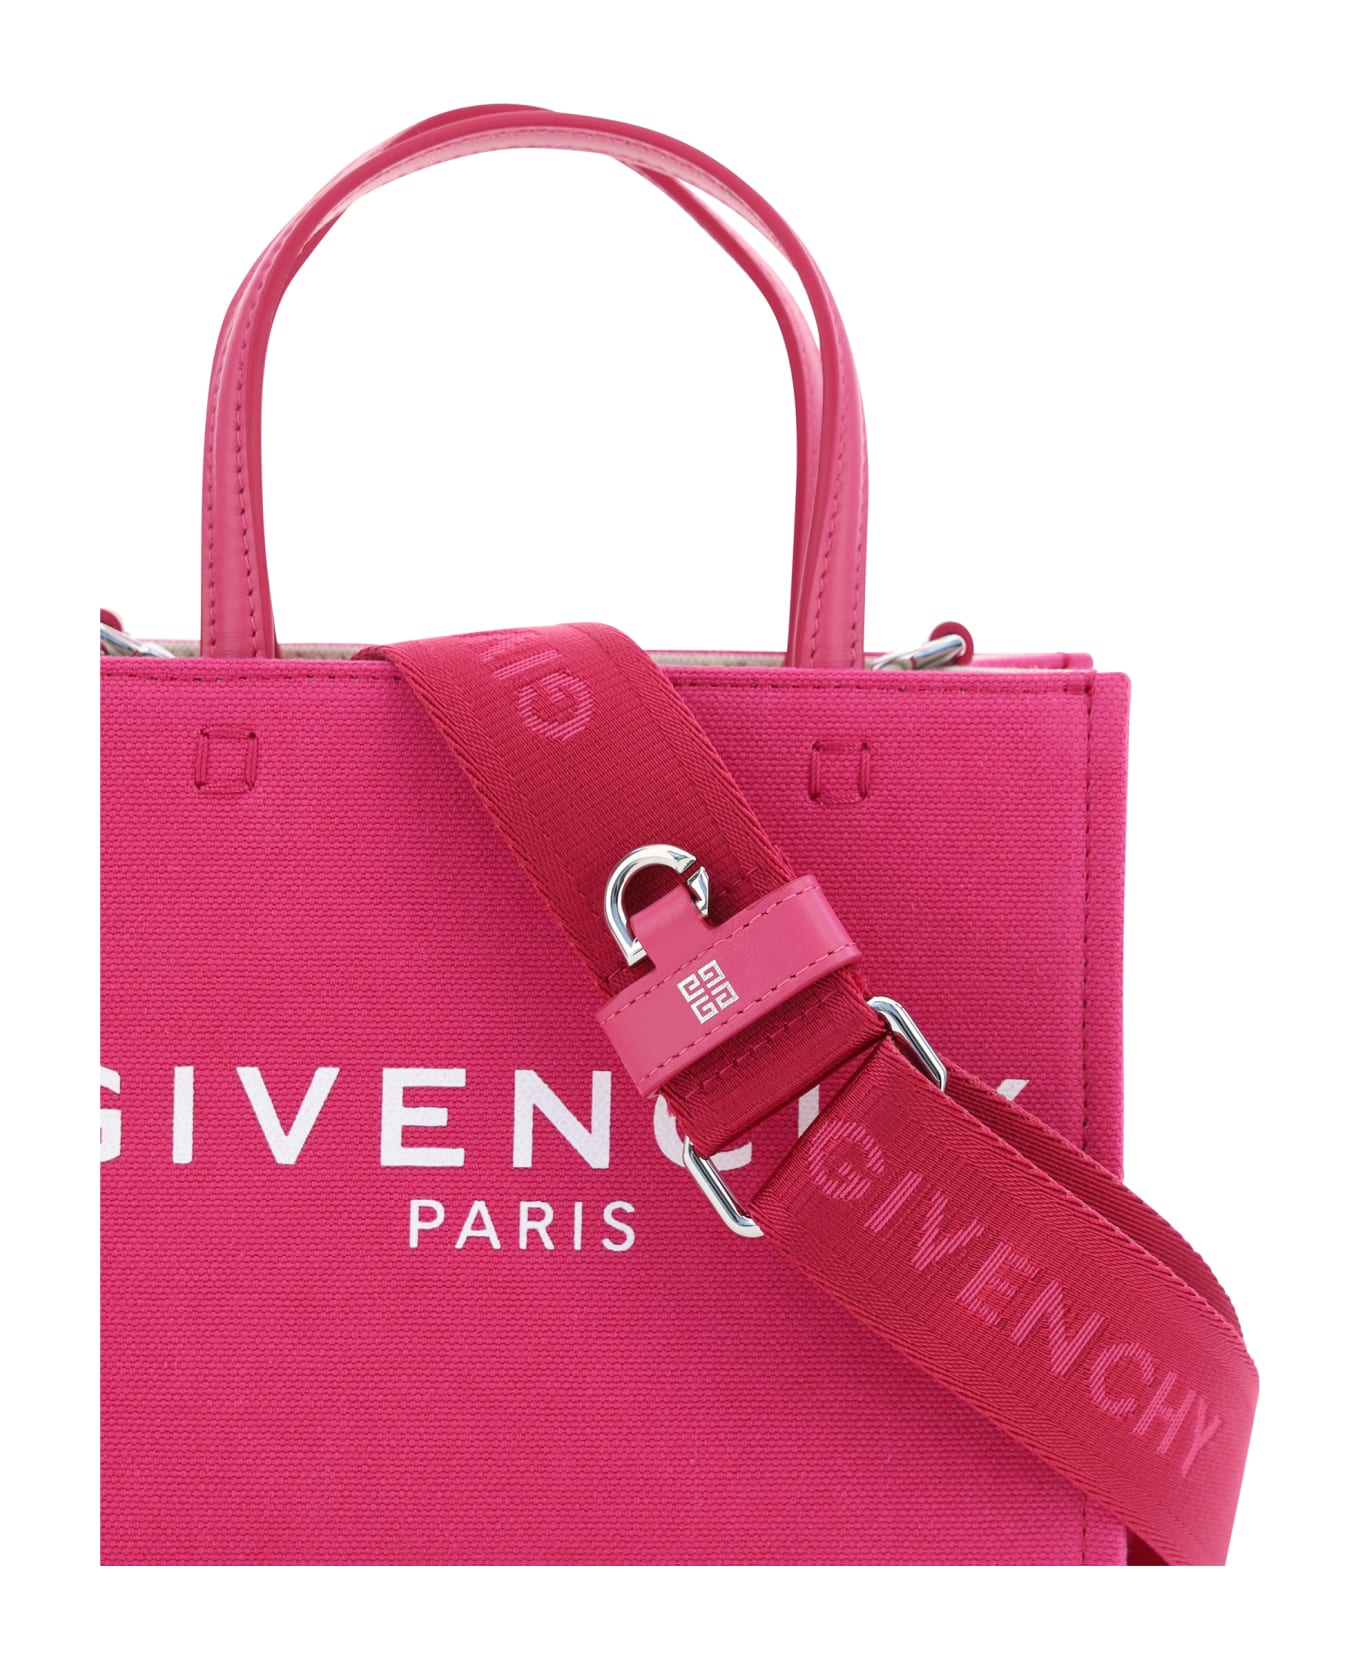 Givenchy Mini G-tote Bag - Fuchsia